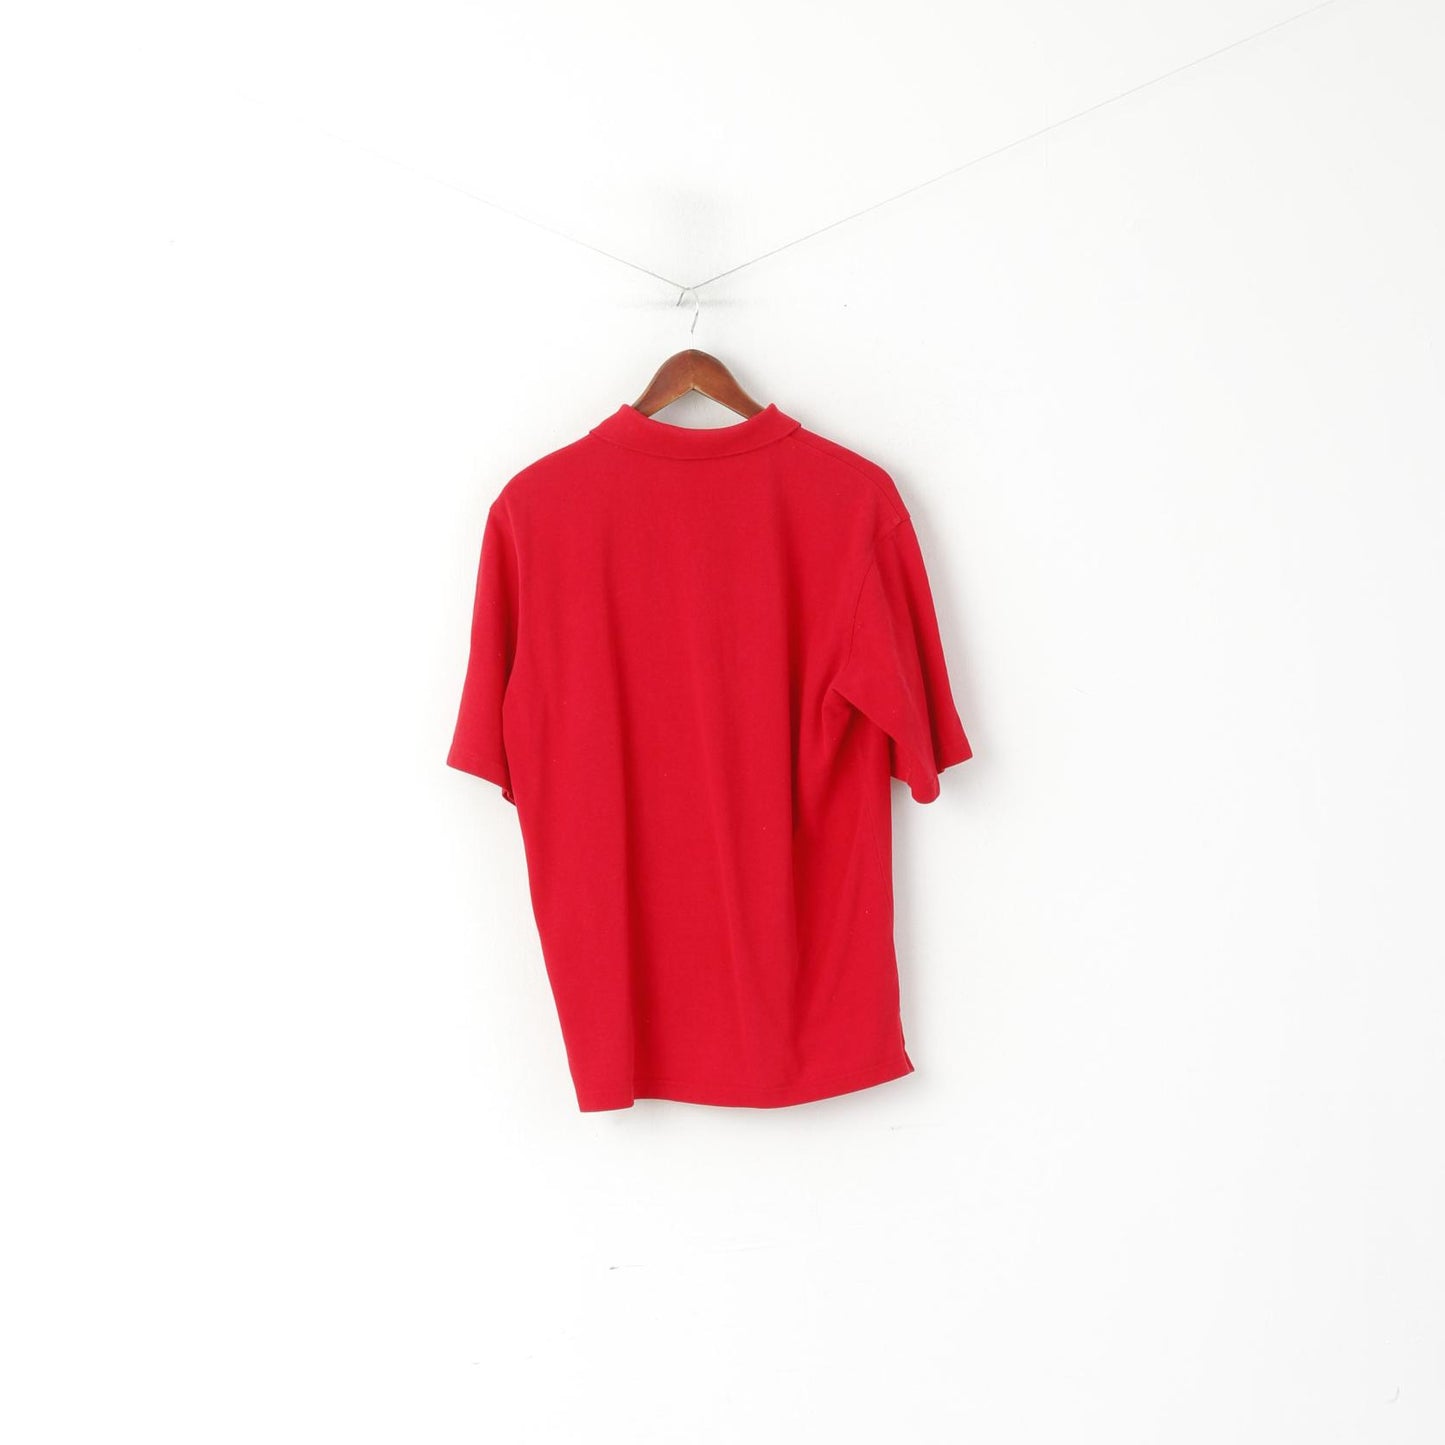 Adidas Men L Polo Shirt Red 100% Cotton Vintage Detailed Buttons Plain Top